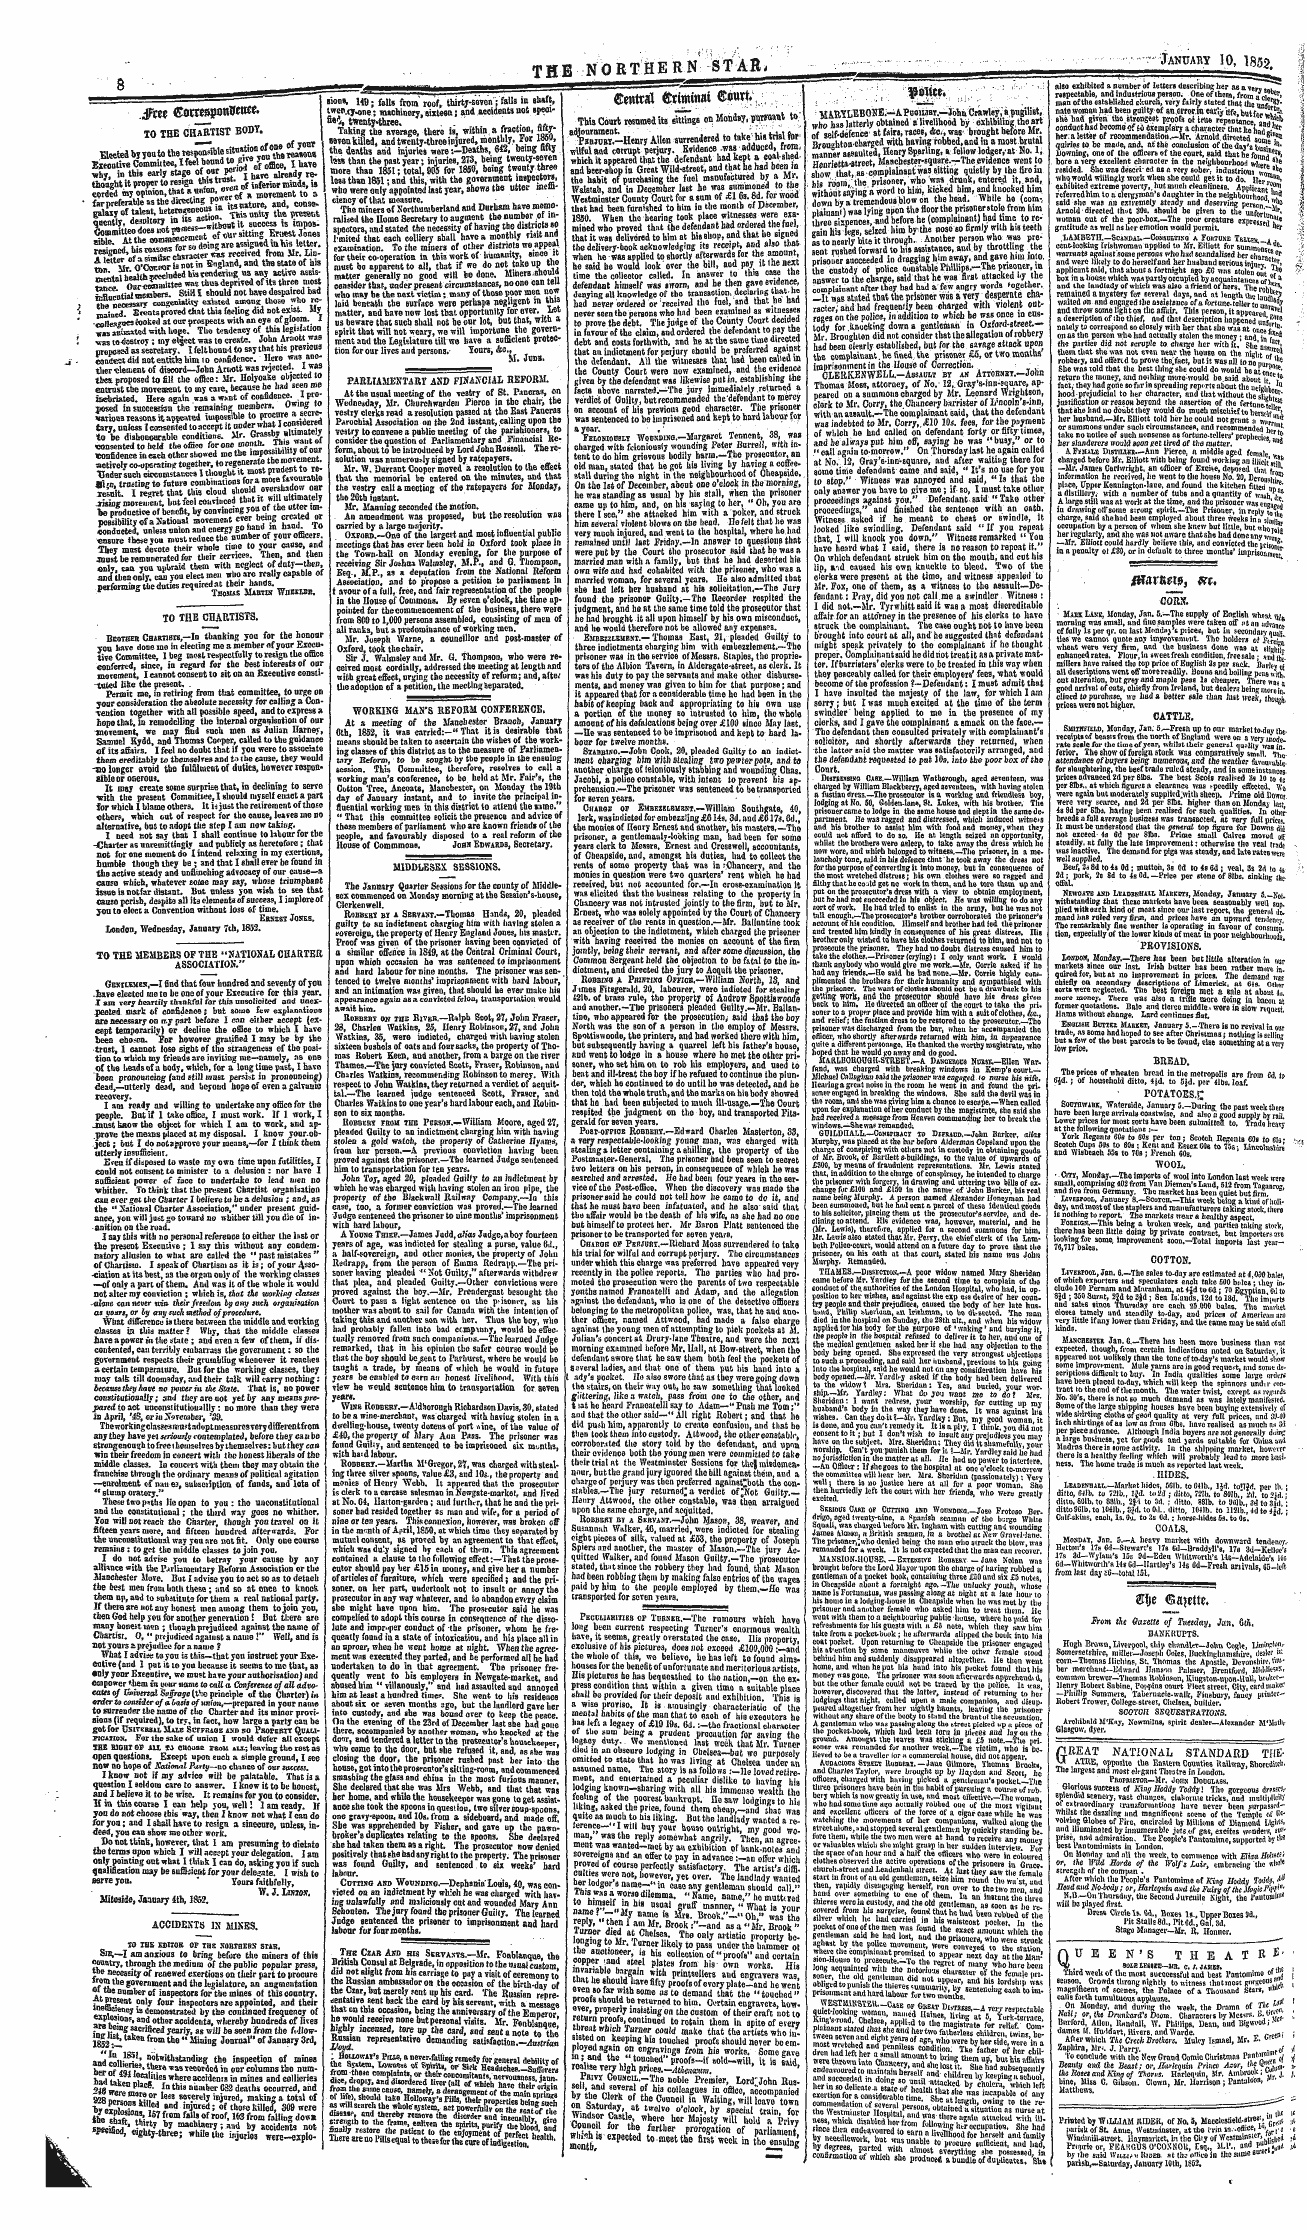 Northern Star (1837-1852): jS F Y, 2nd edition - . A(«.T«*« . , ¦¦; ;':; :¦;",;;:; 'Mtt?..; ;_:V ' ': ,.,".